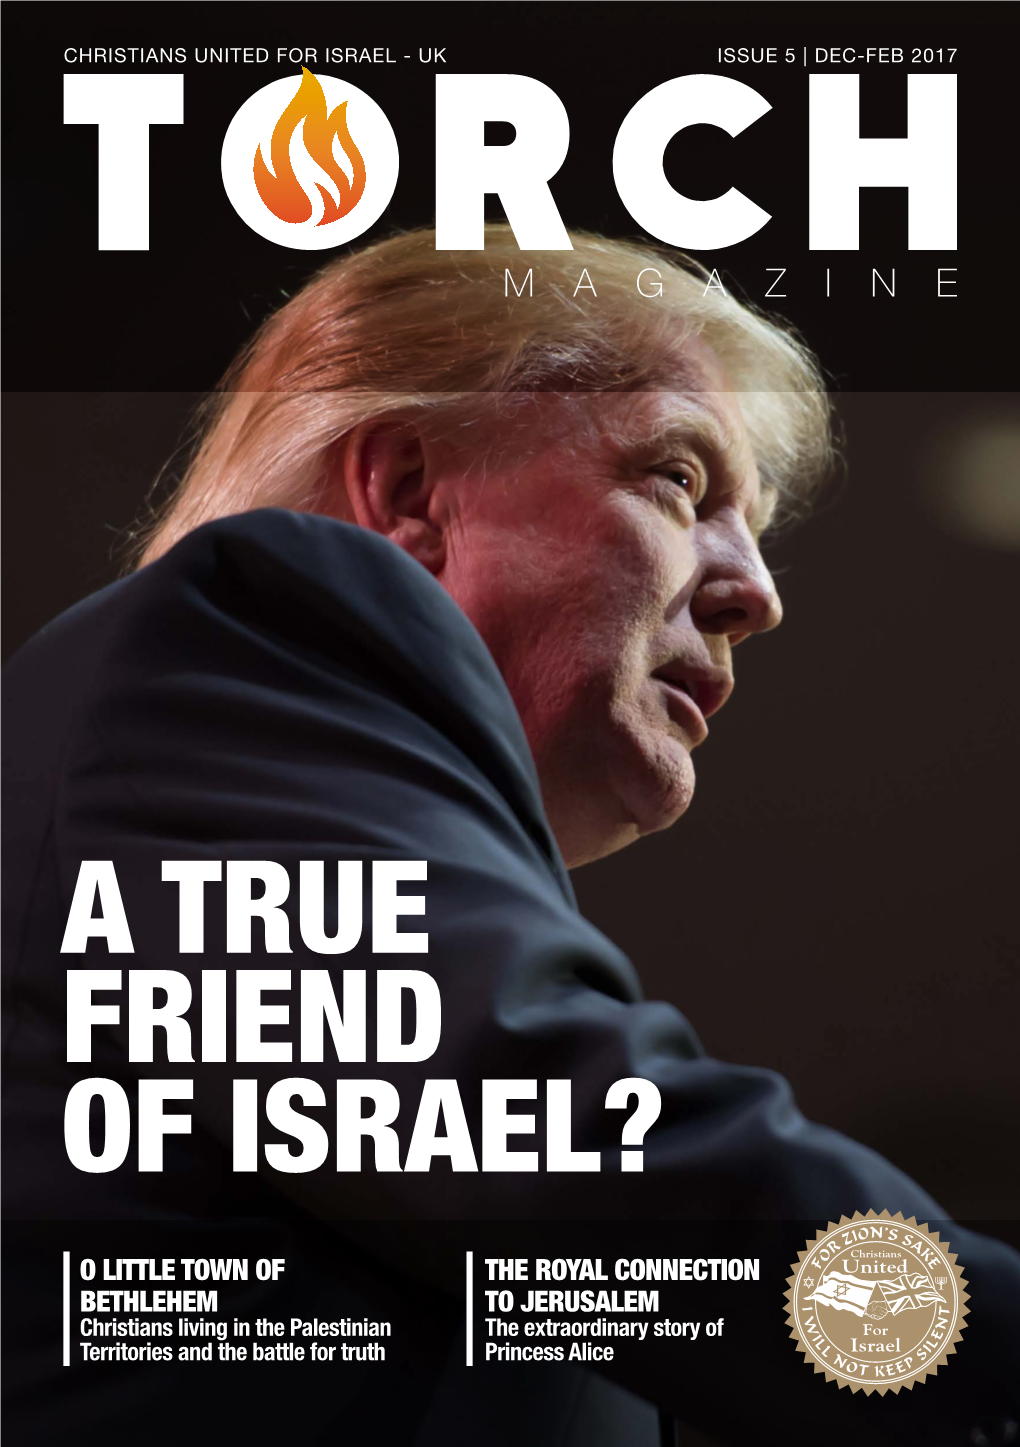 A True Friend of Israel?